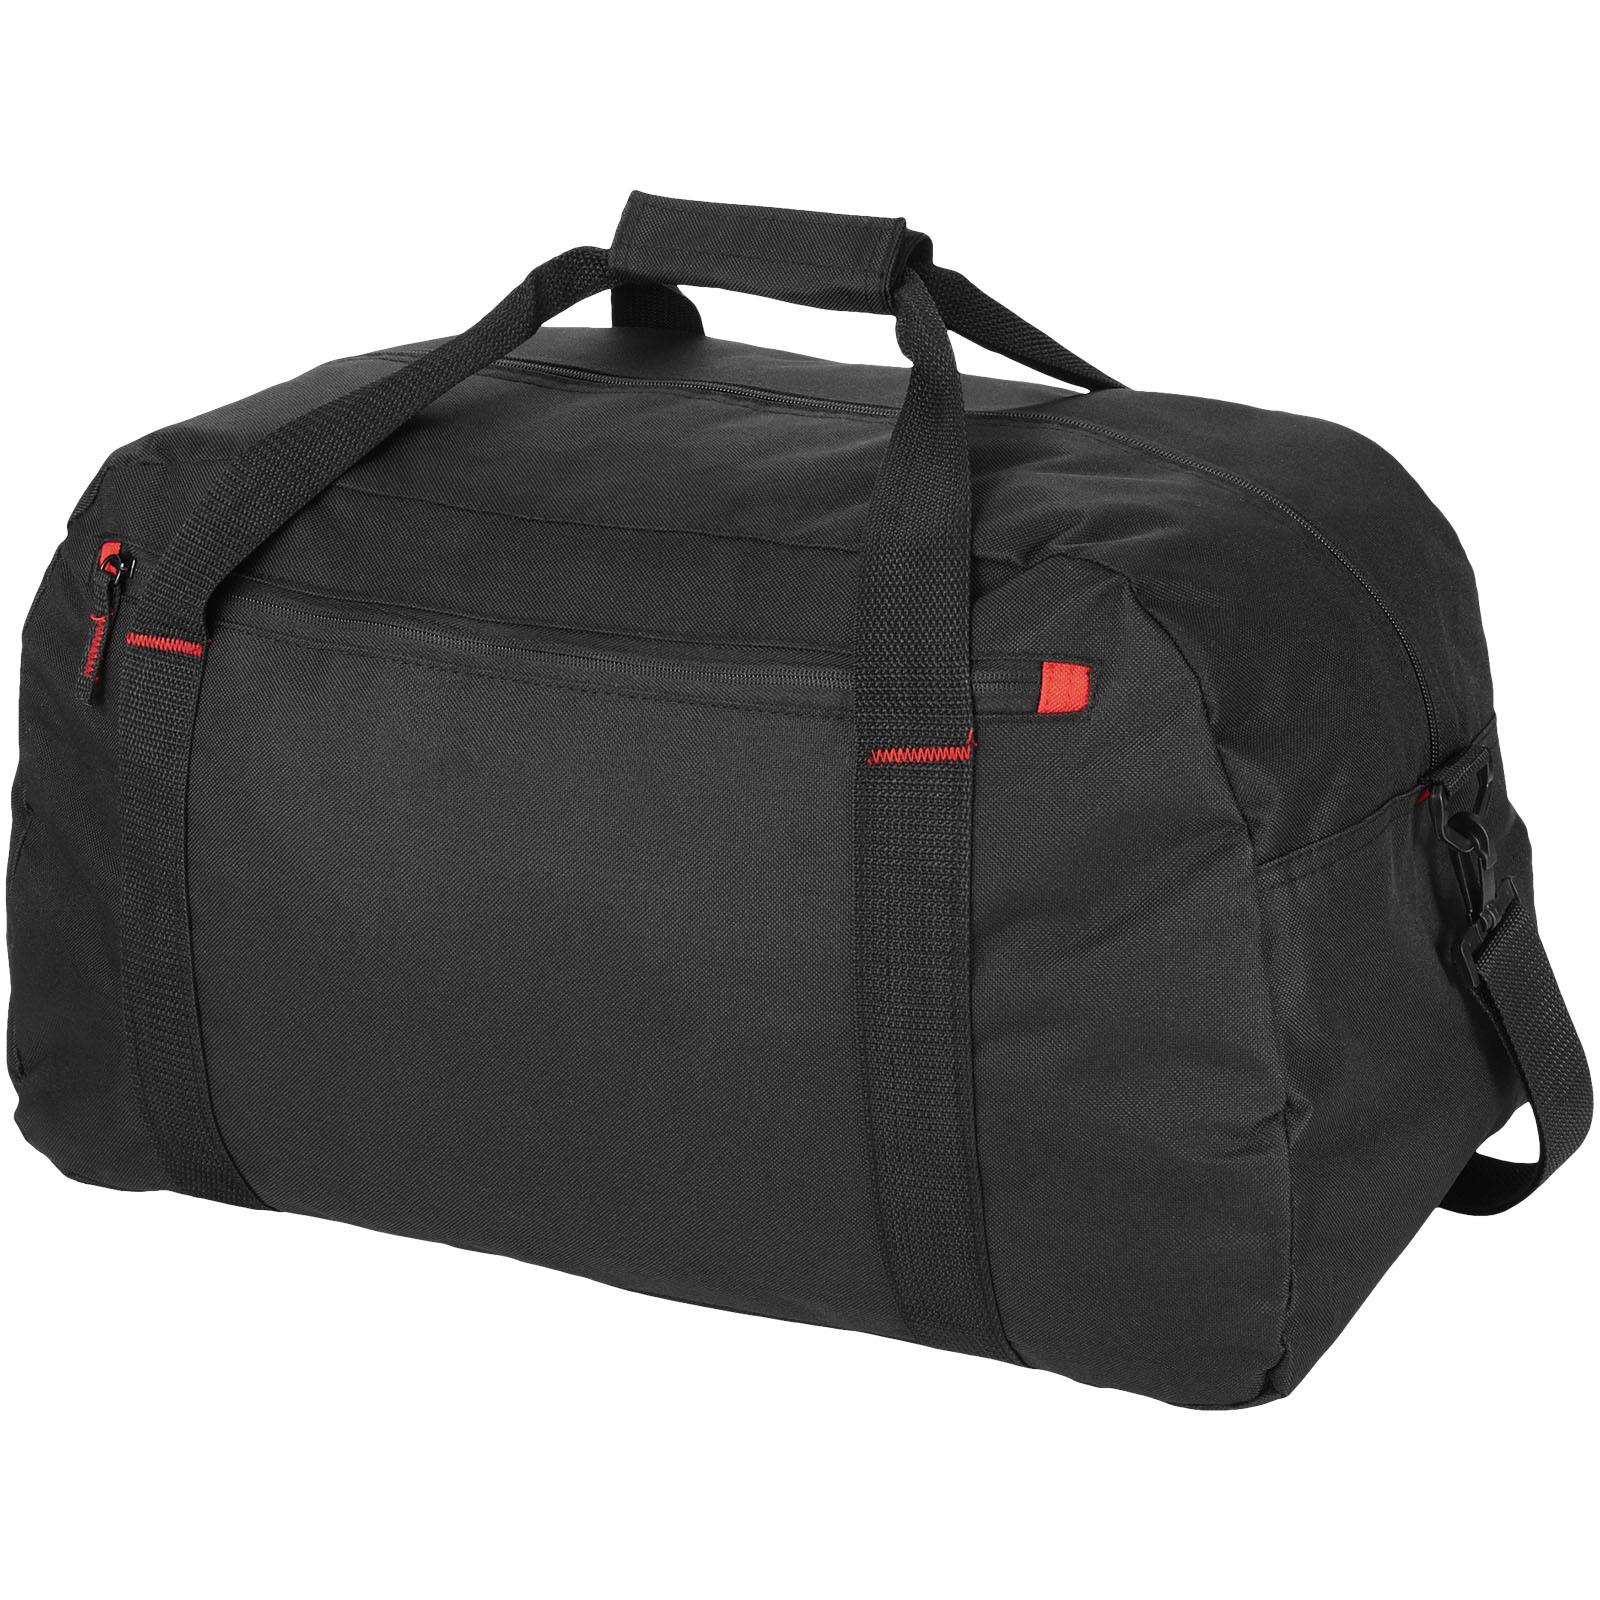 Travel bags - Vancouver travel duffel bag 35L